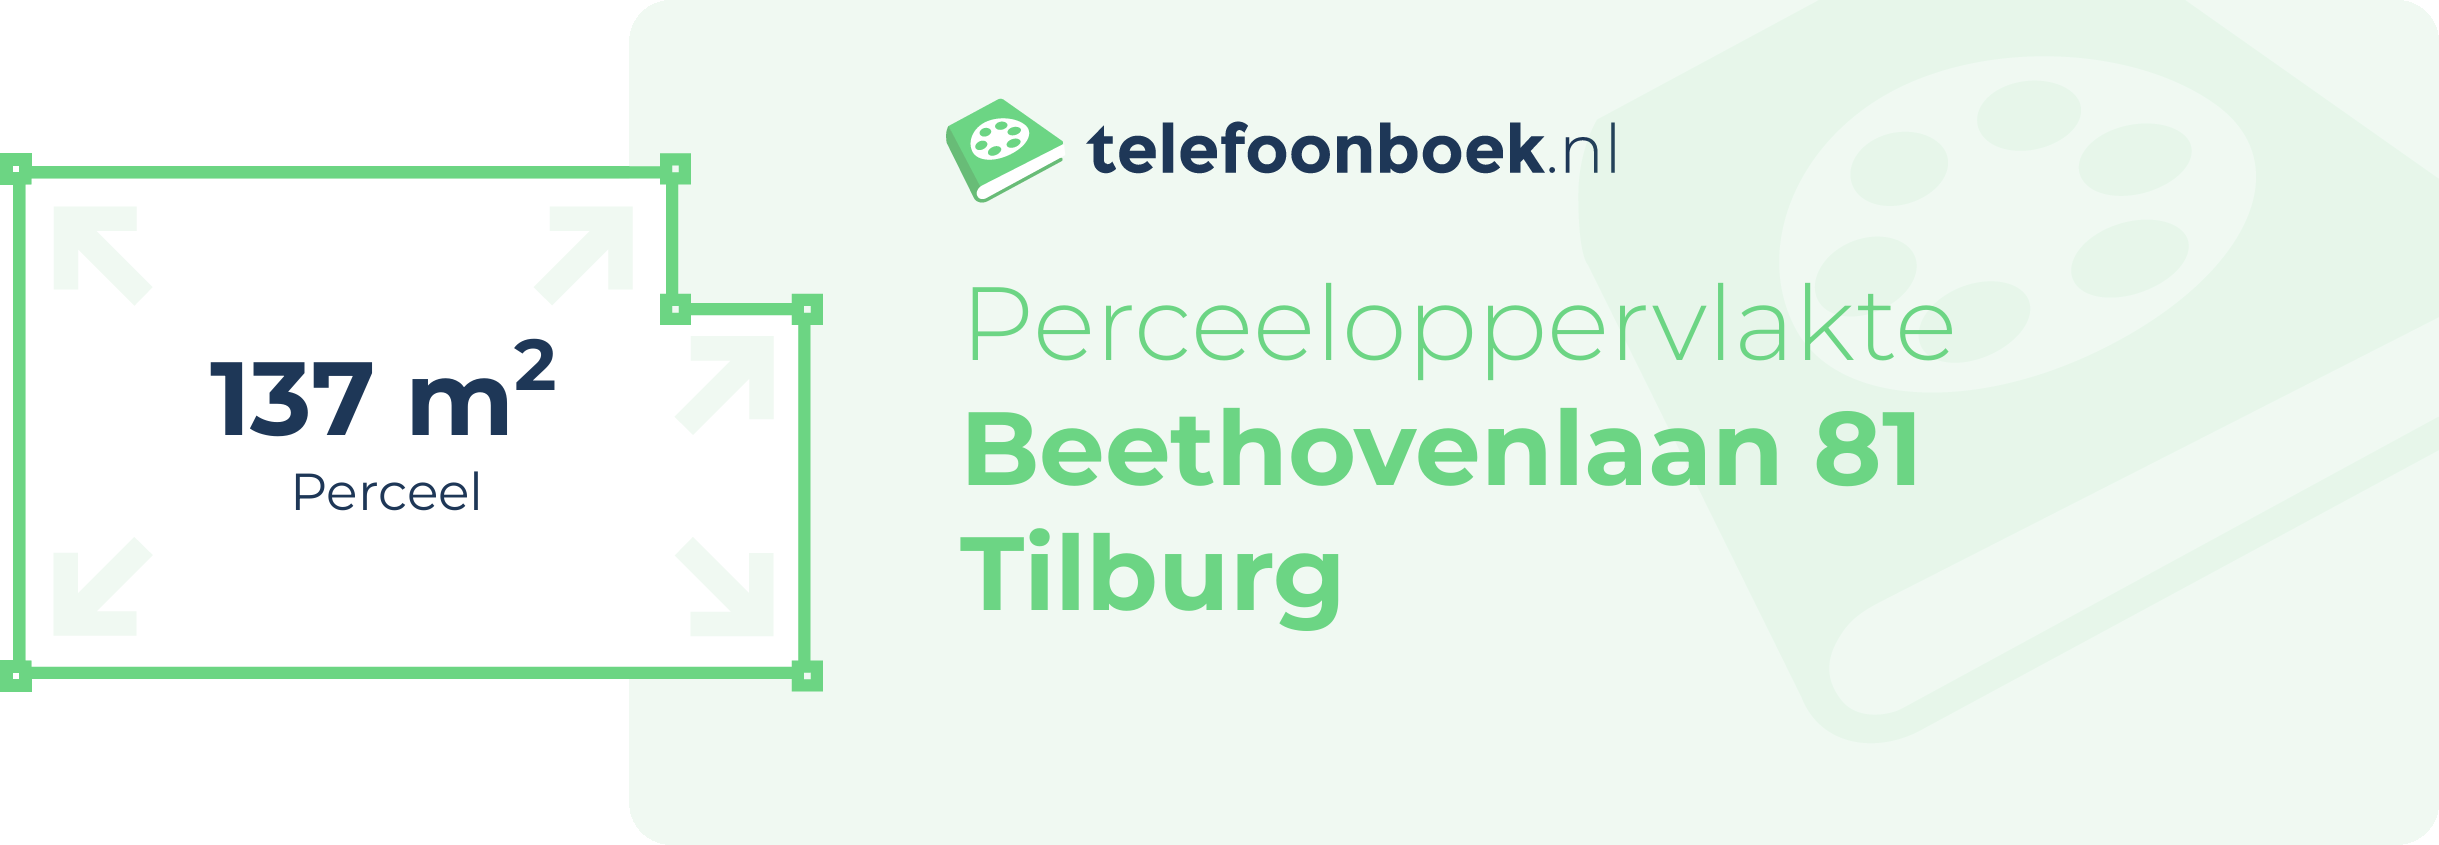 Perceeloppervlakte Beethovenlaan 81 Tilburg